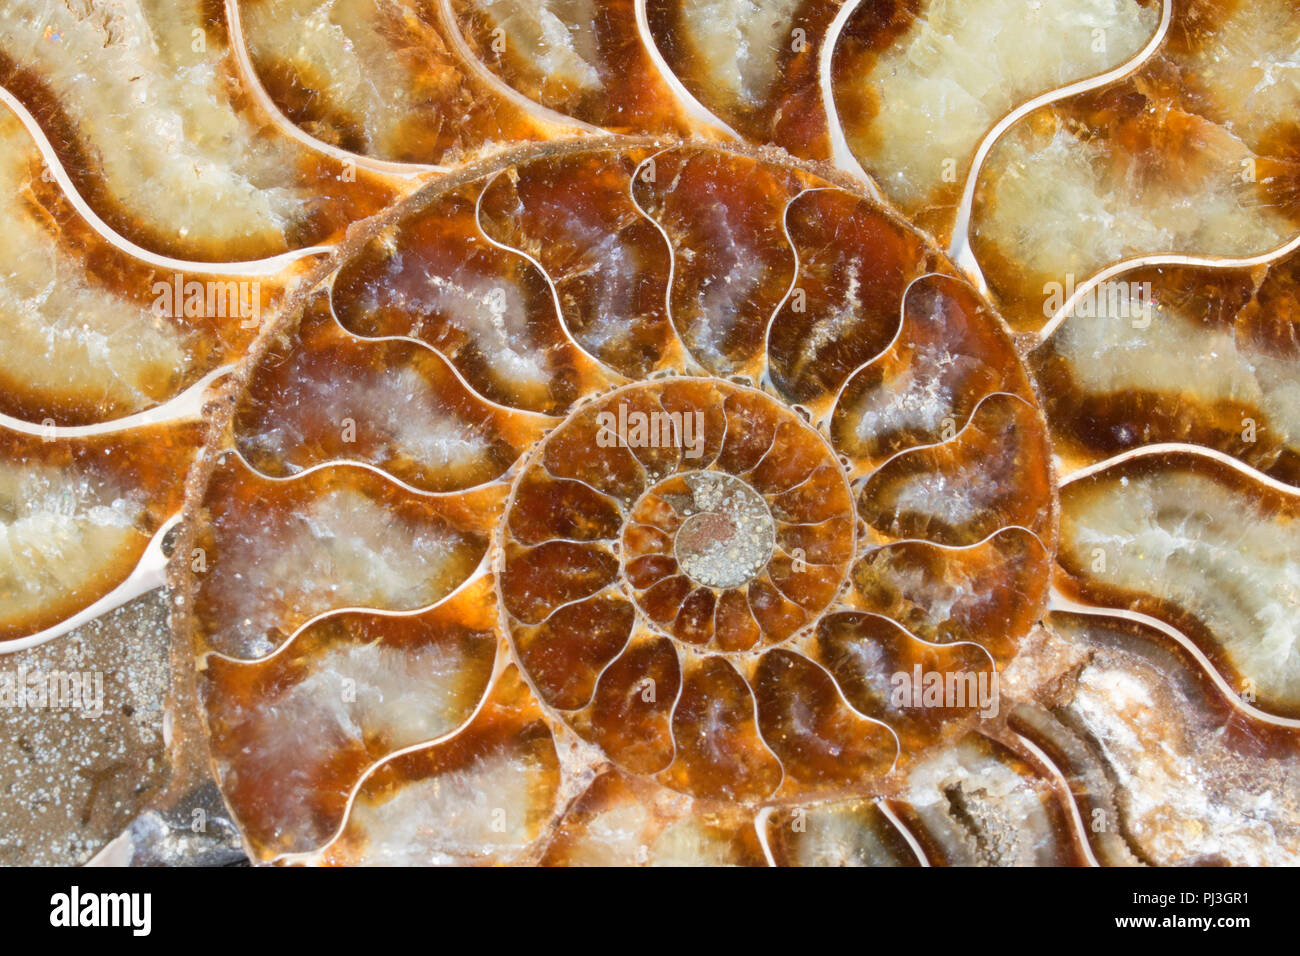 Ammonite fossil Stock Photo